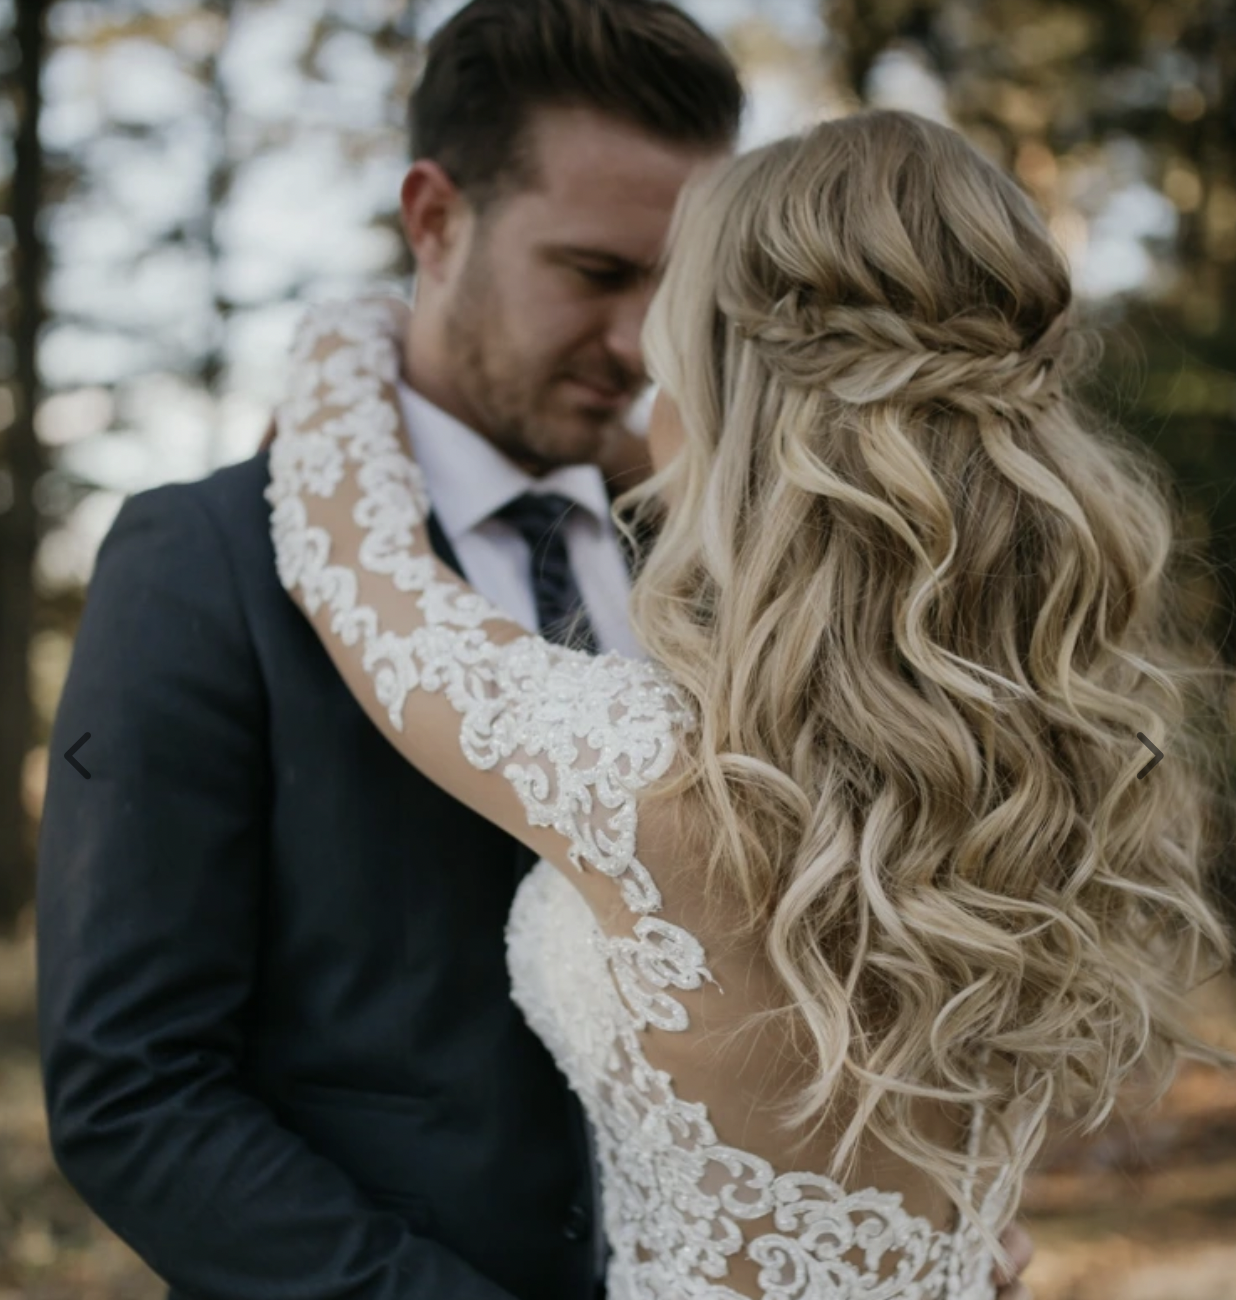 The perfect wedding hair | Fantasy wedding dresses, Wedding hairstyles, Bridal  hair and makeup